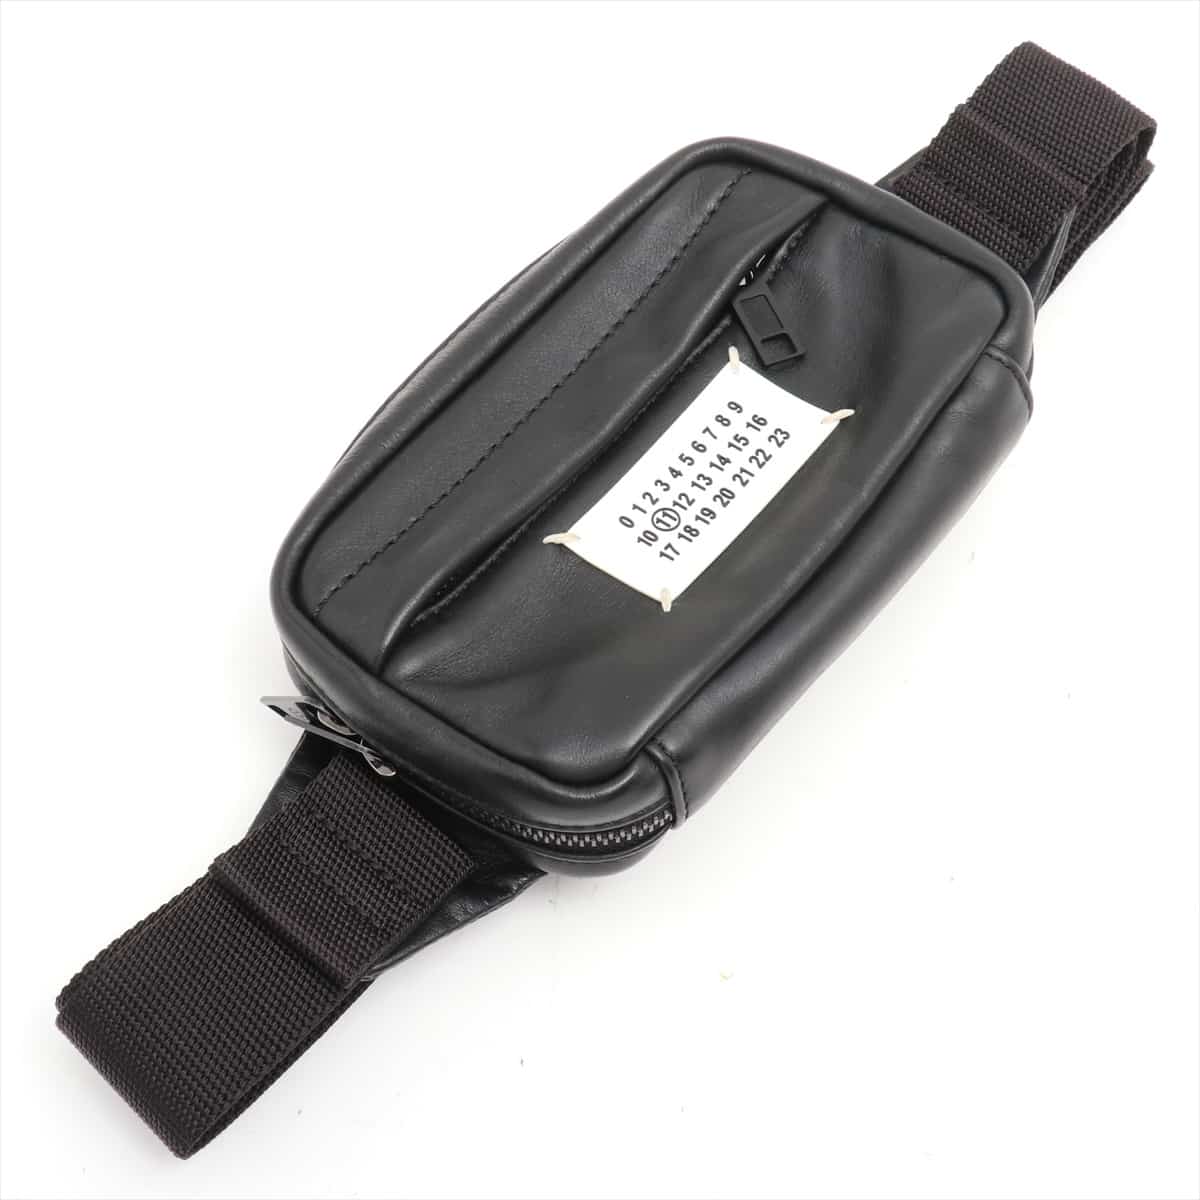 Maison Margiela Leather Waist bag Black S55WB0014